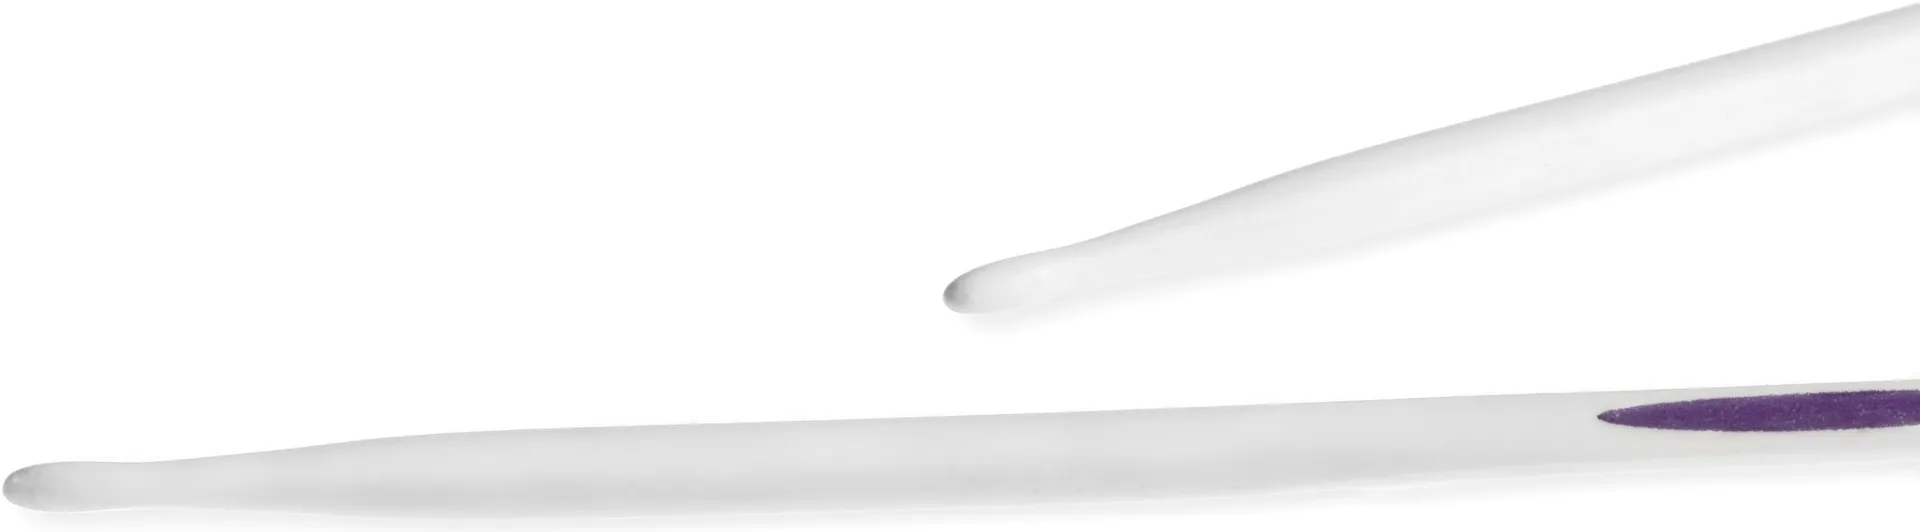 Prym Sukkapuikko Ergo 15cm - 3mm - 3